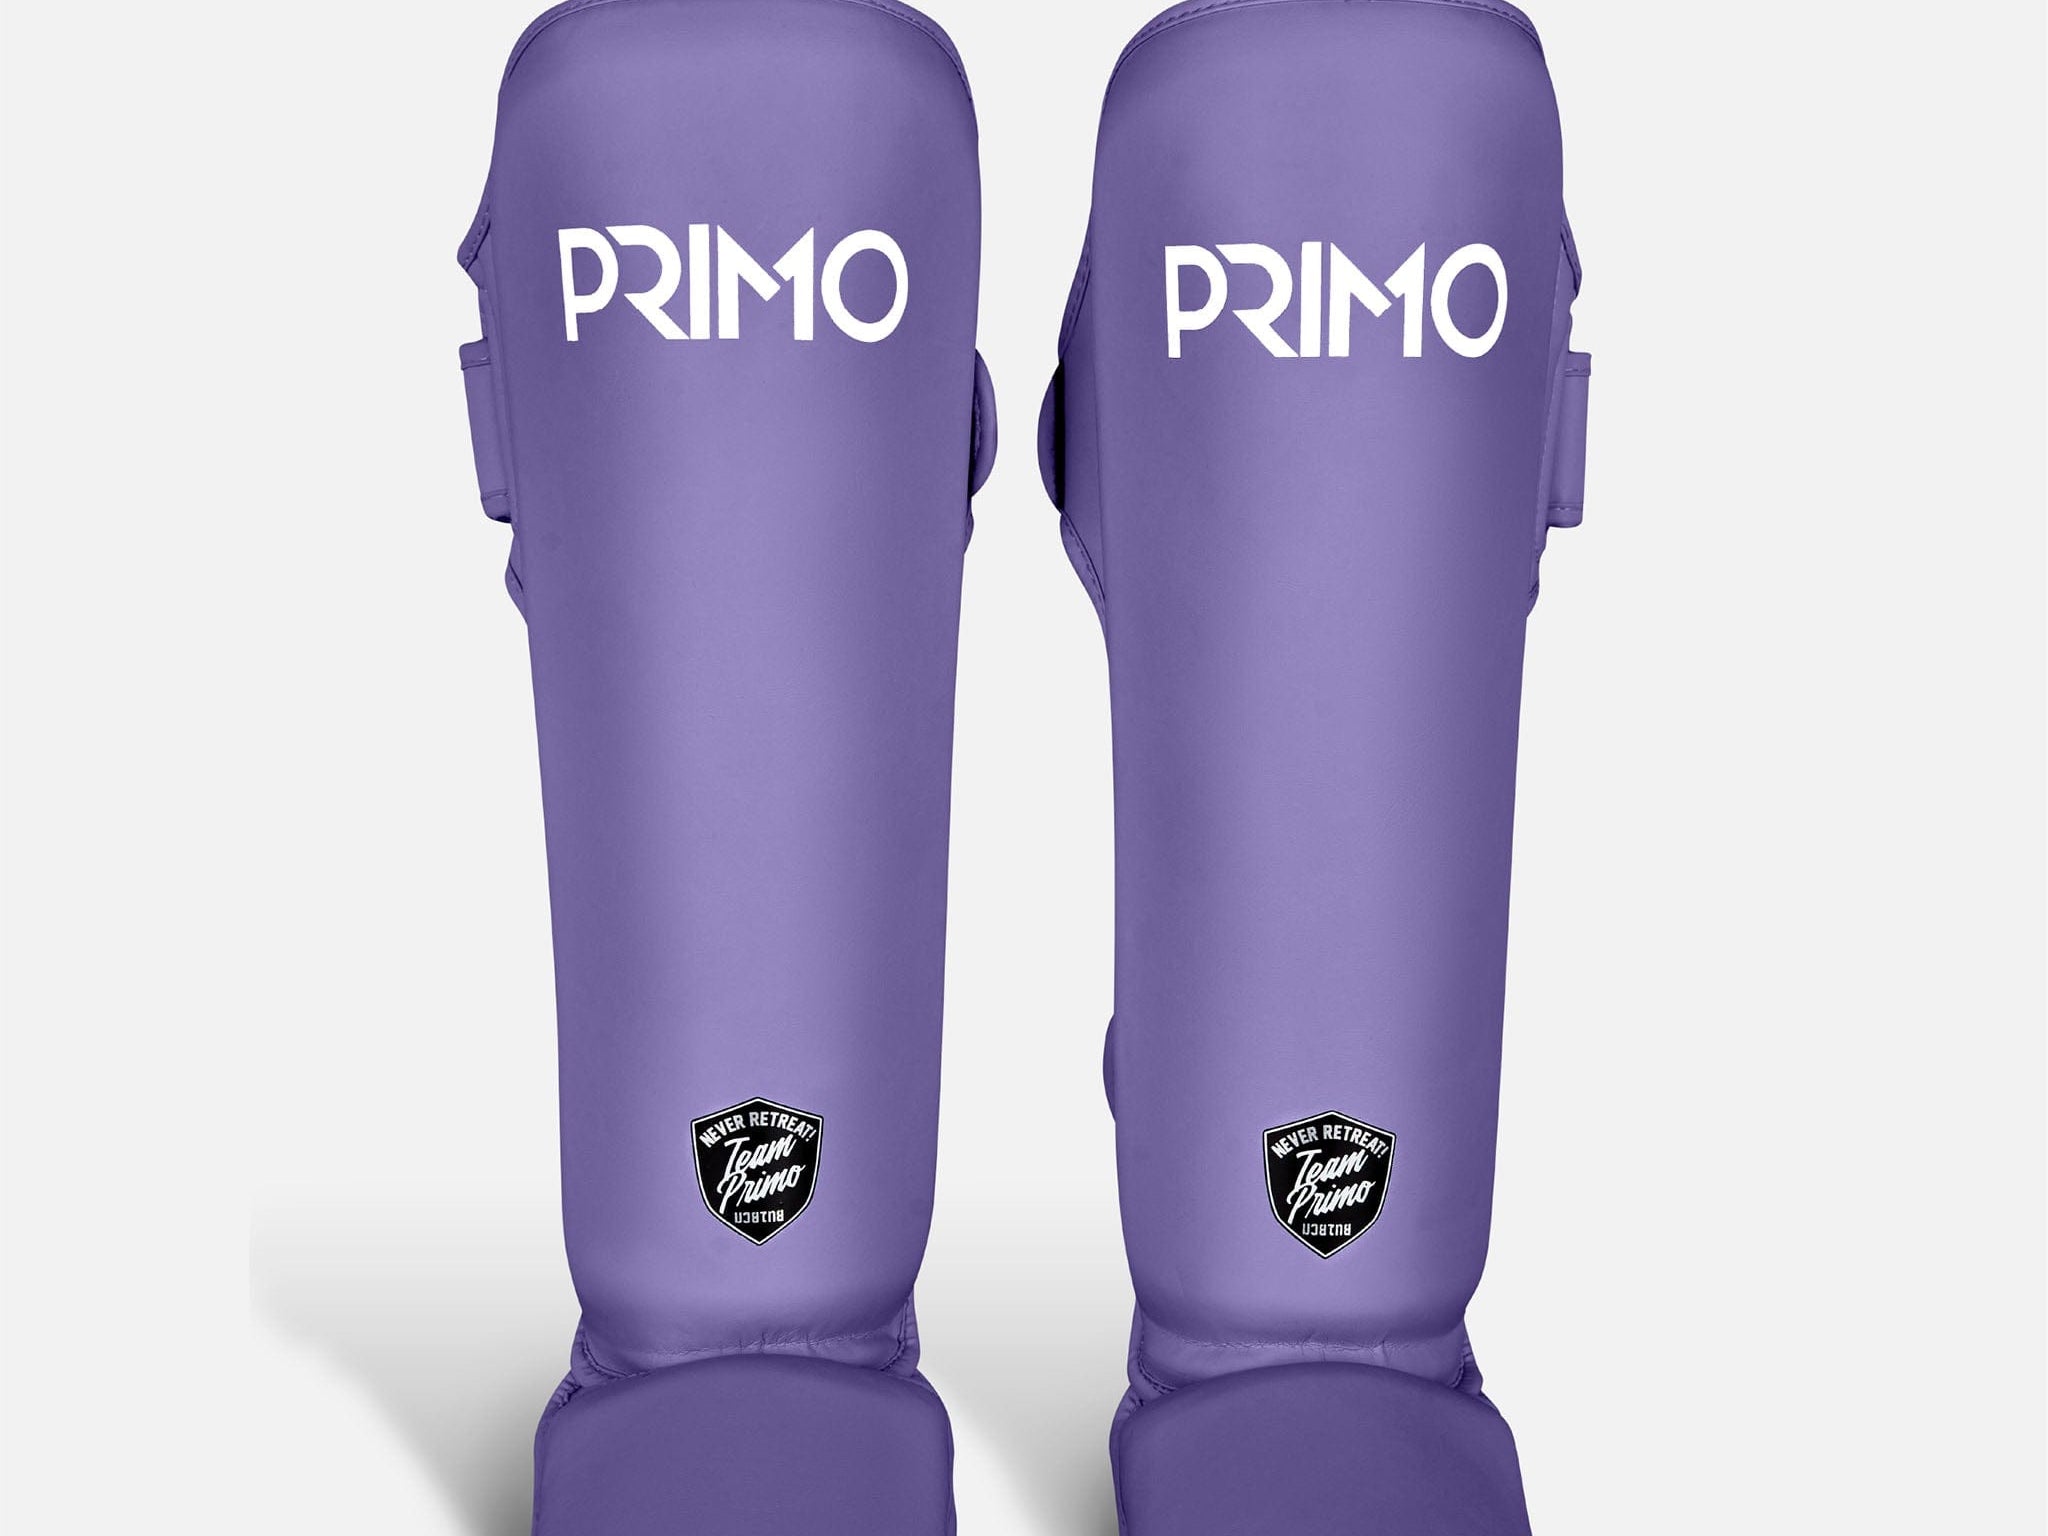 Primo Fight Wear Official Classic Muay Thai Shinguard - Purple